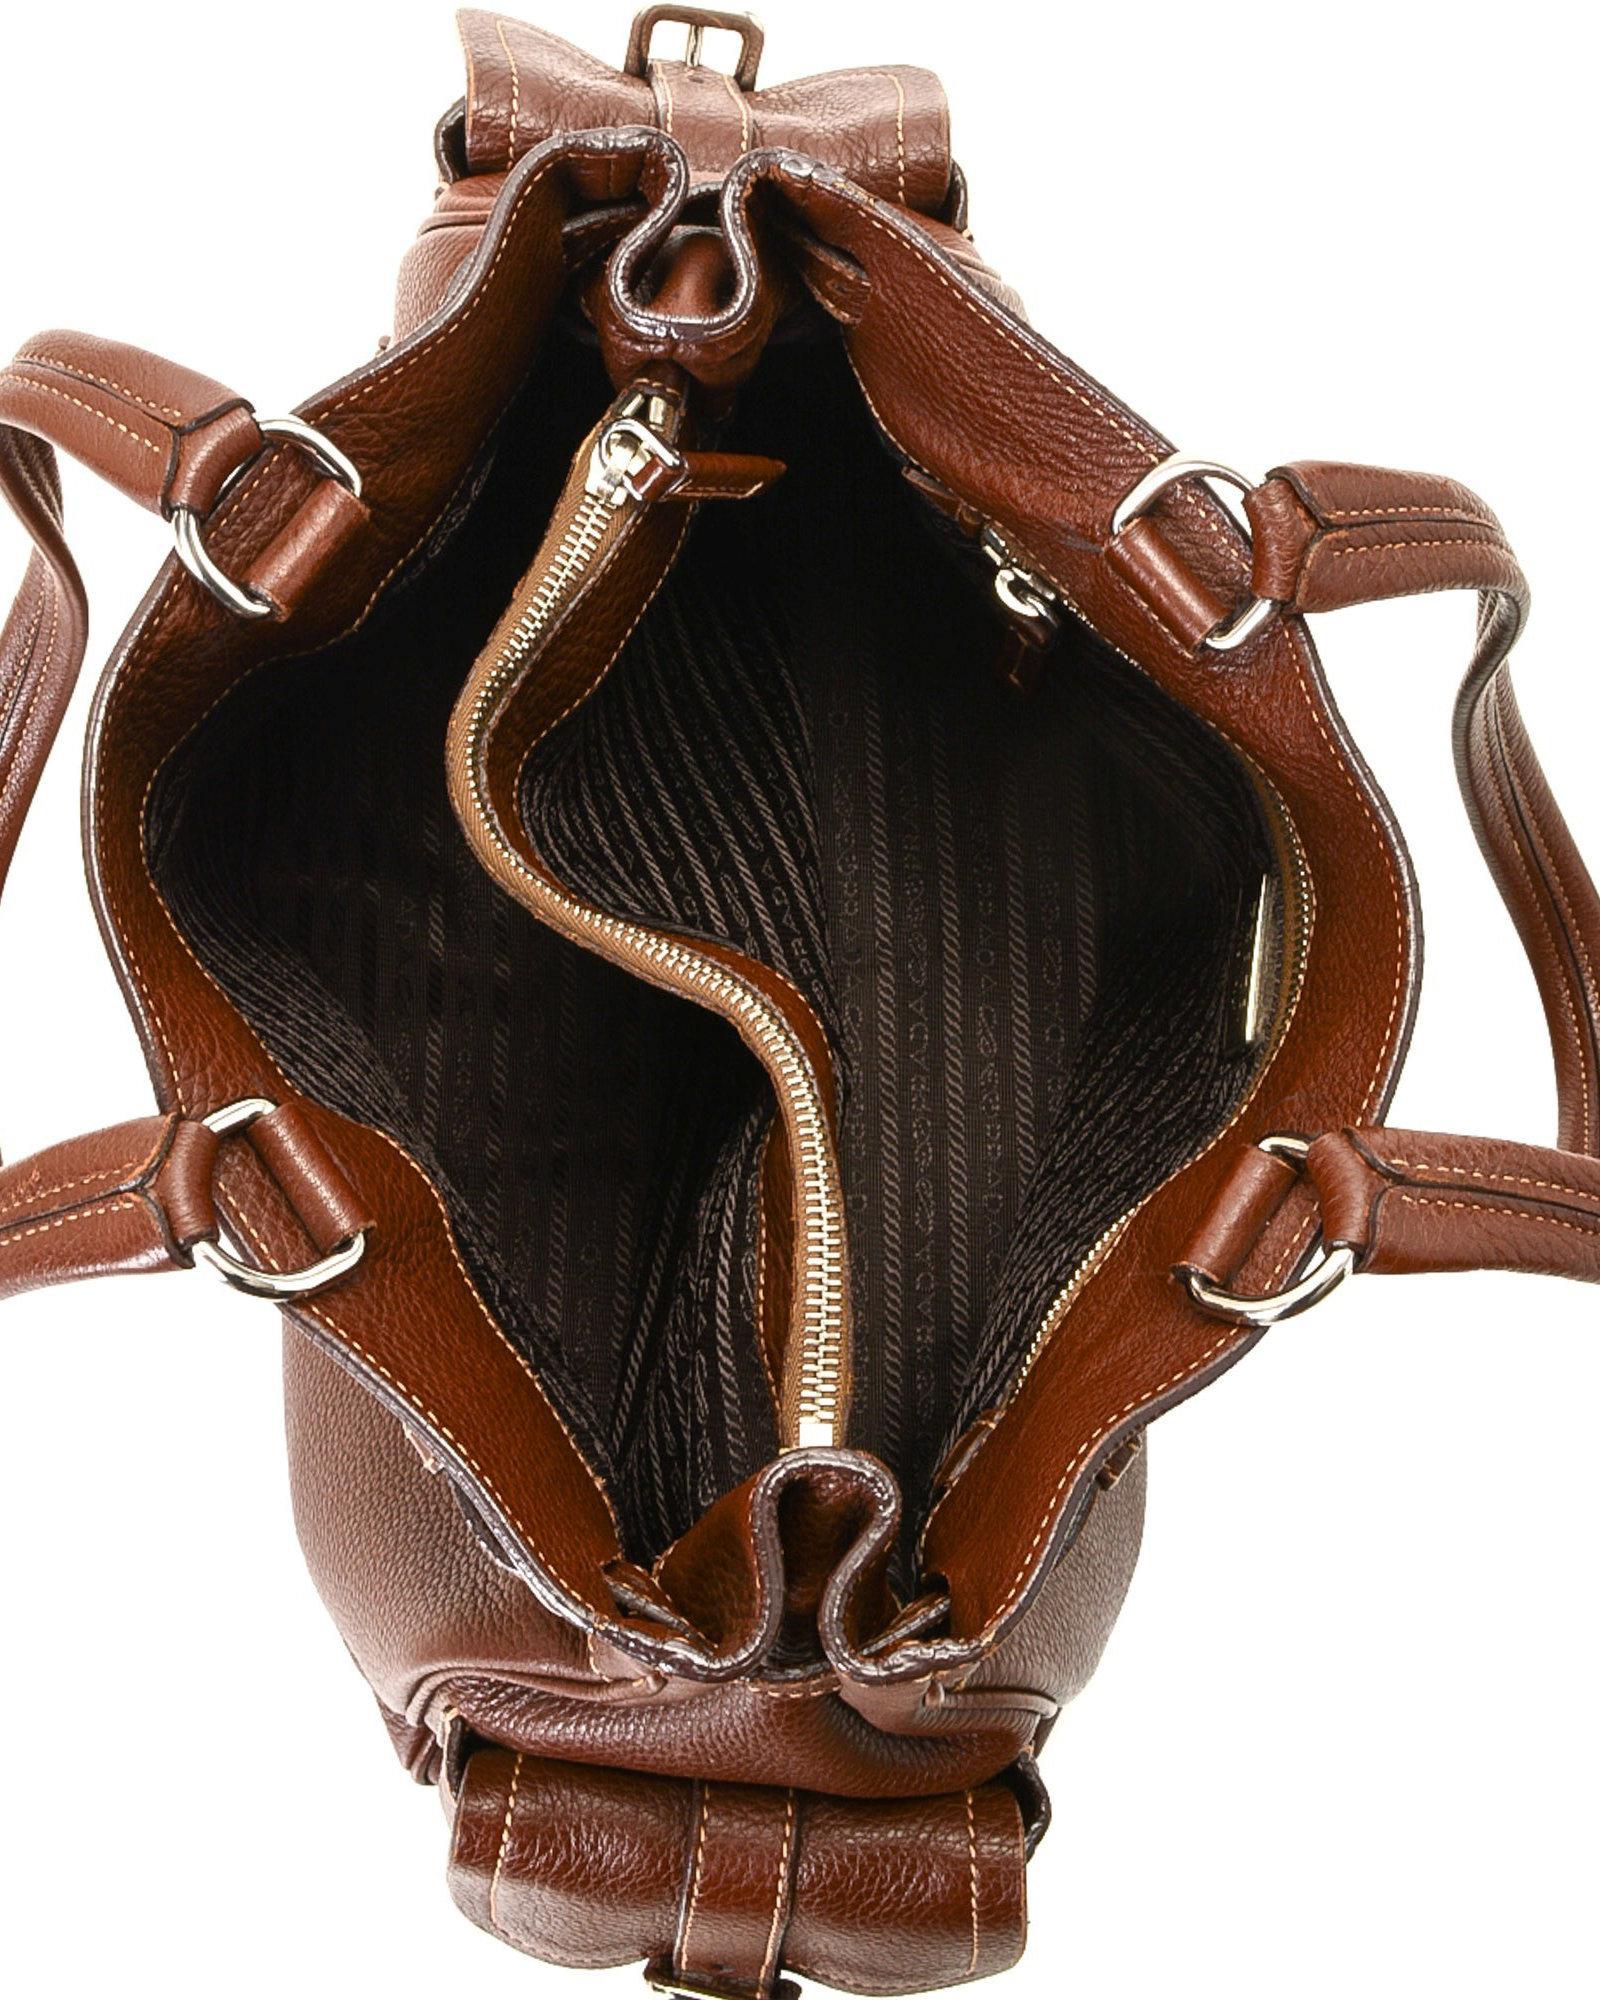 vintage leather prada bag, OFF 70%,naktifgayrimenkul.com